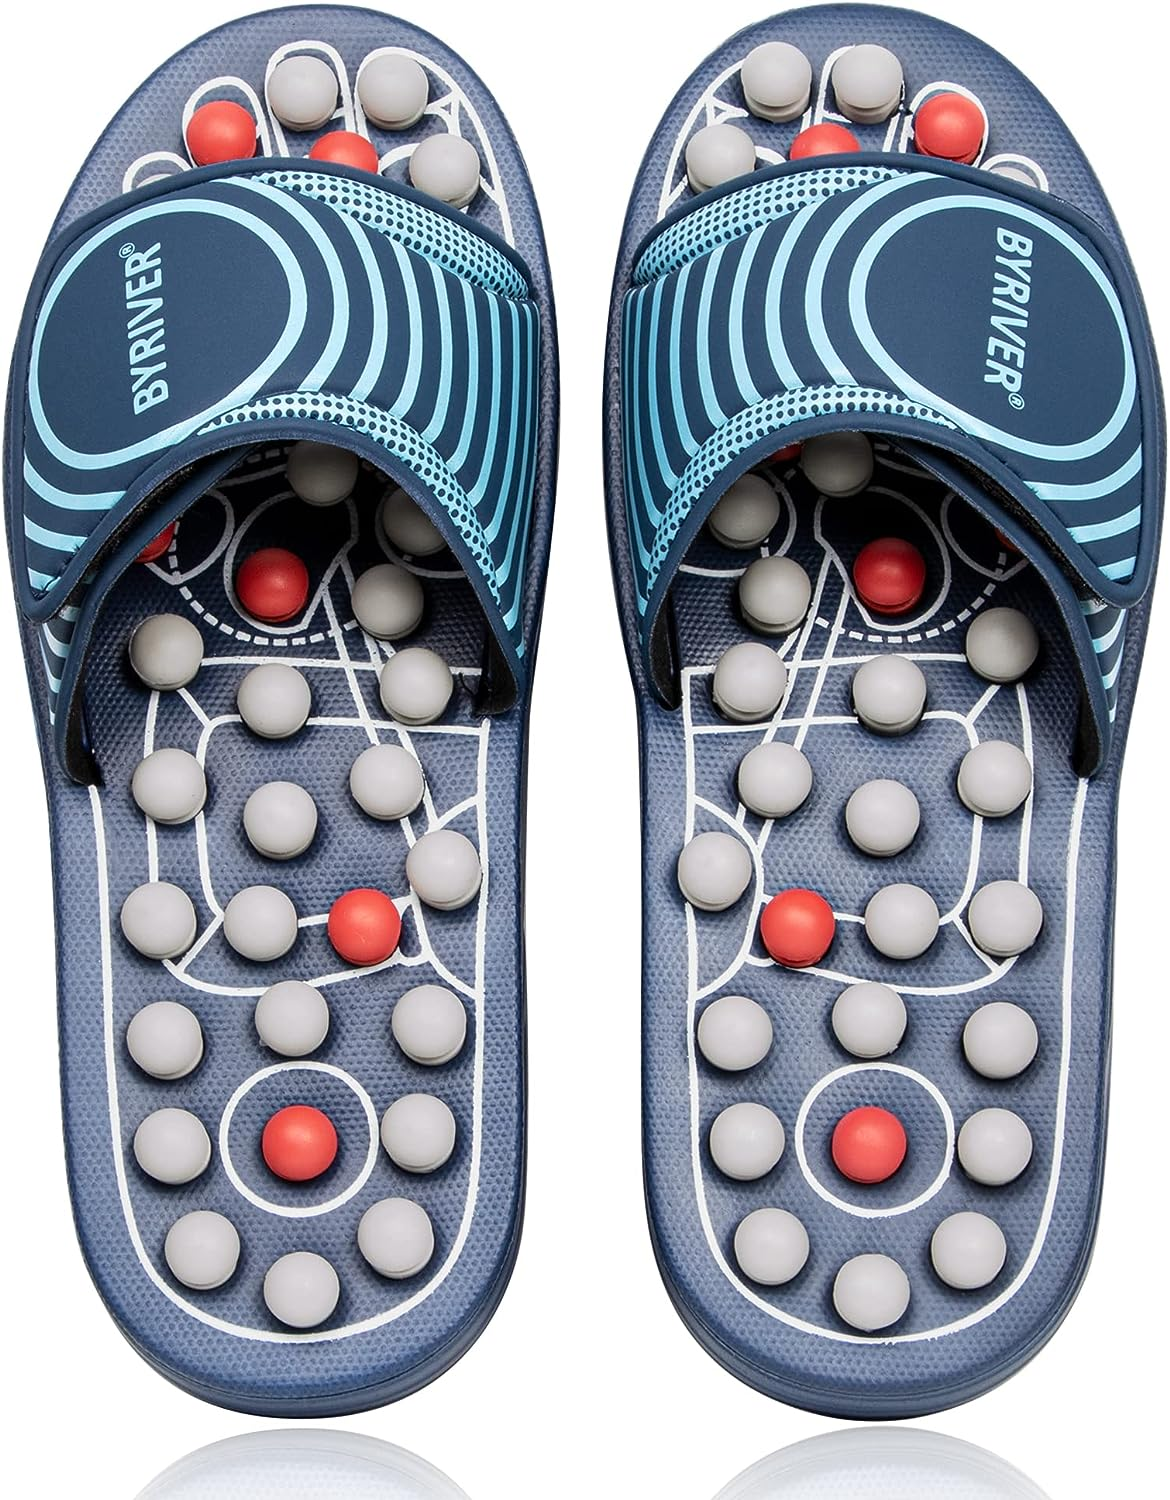 acupunture massage slippers